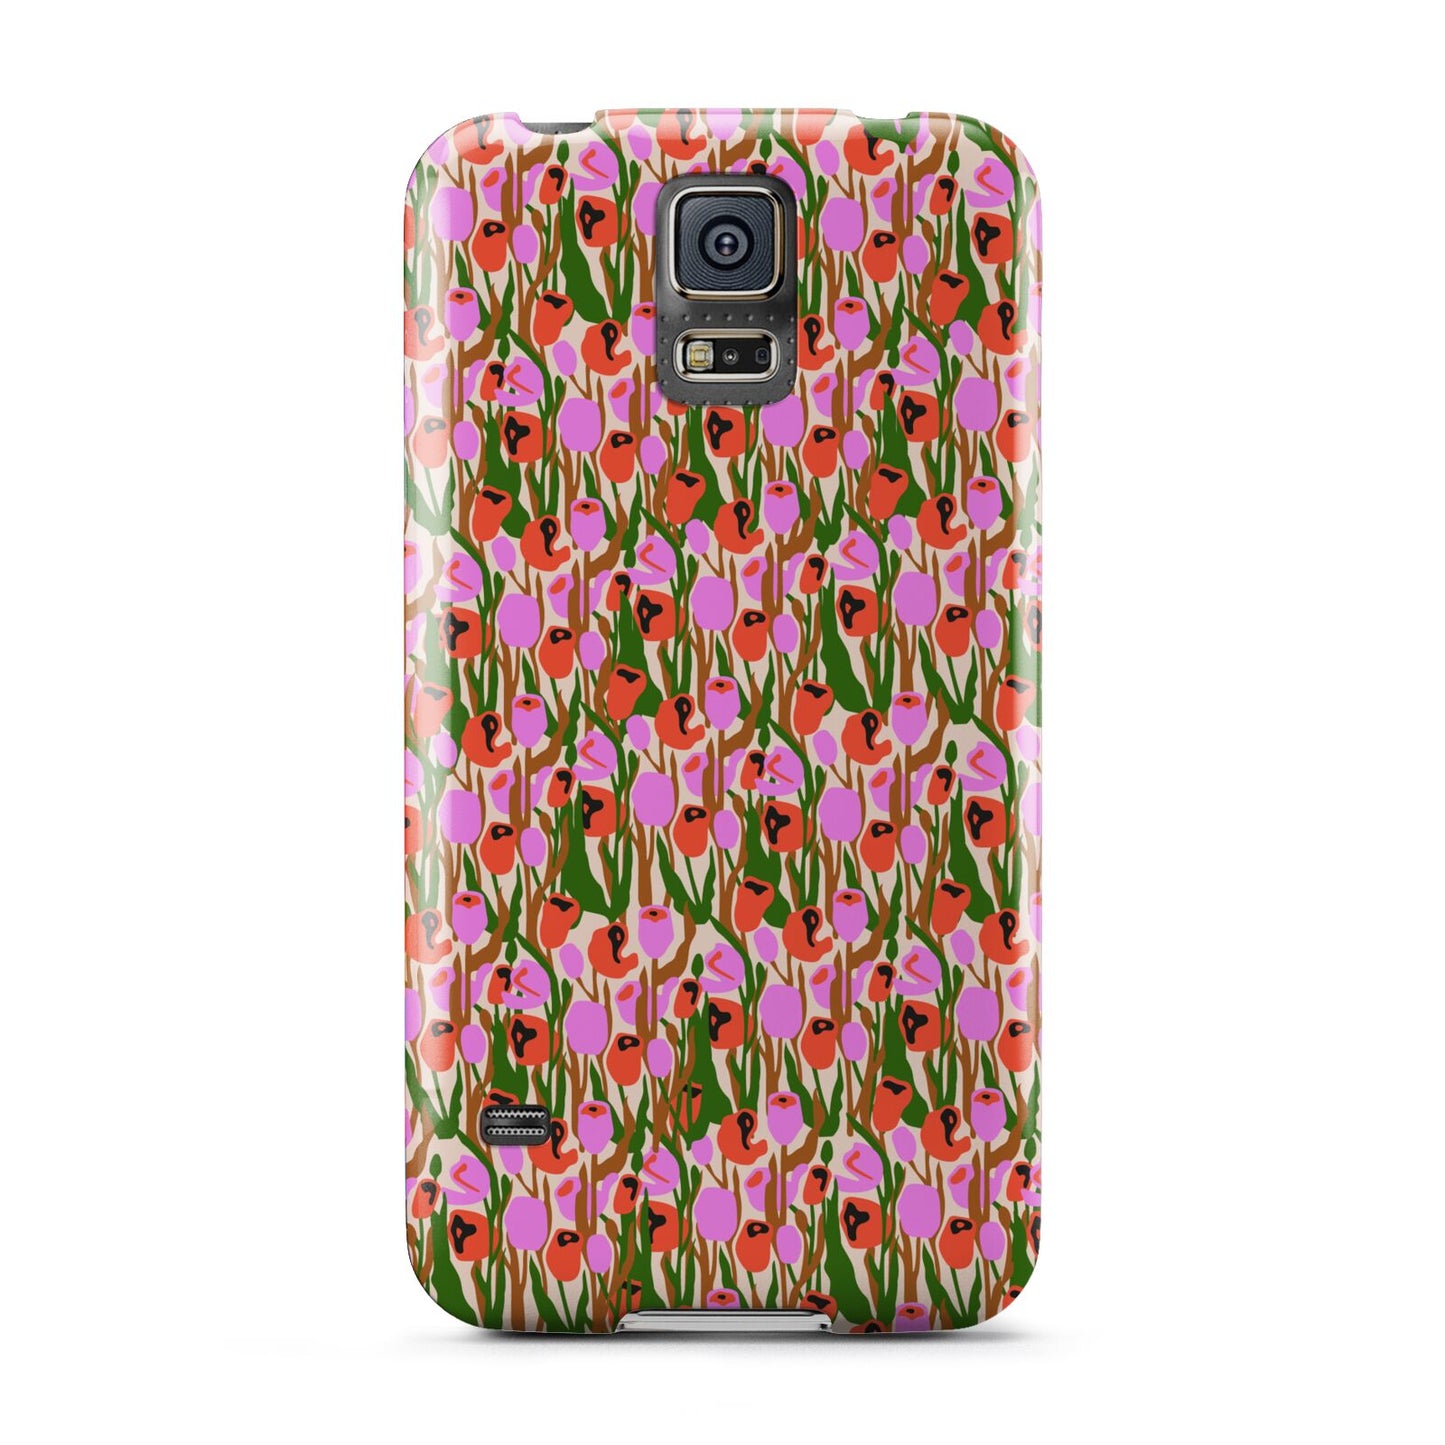 Floral Samsung Galaxy S5 Case